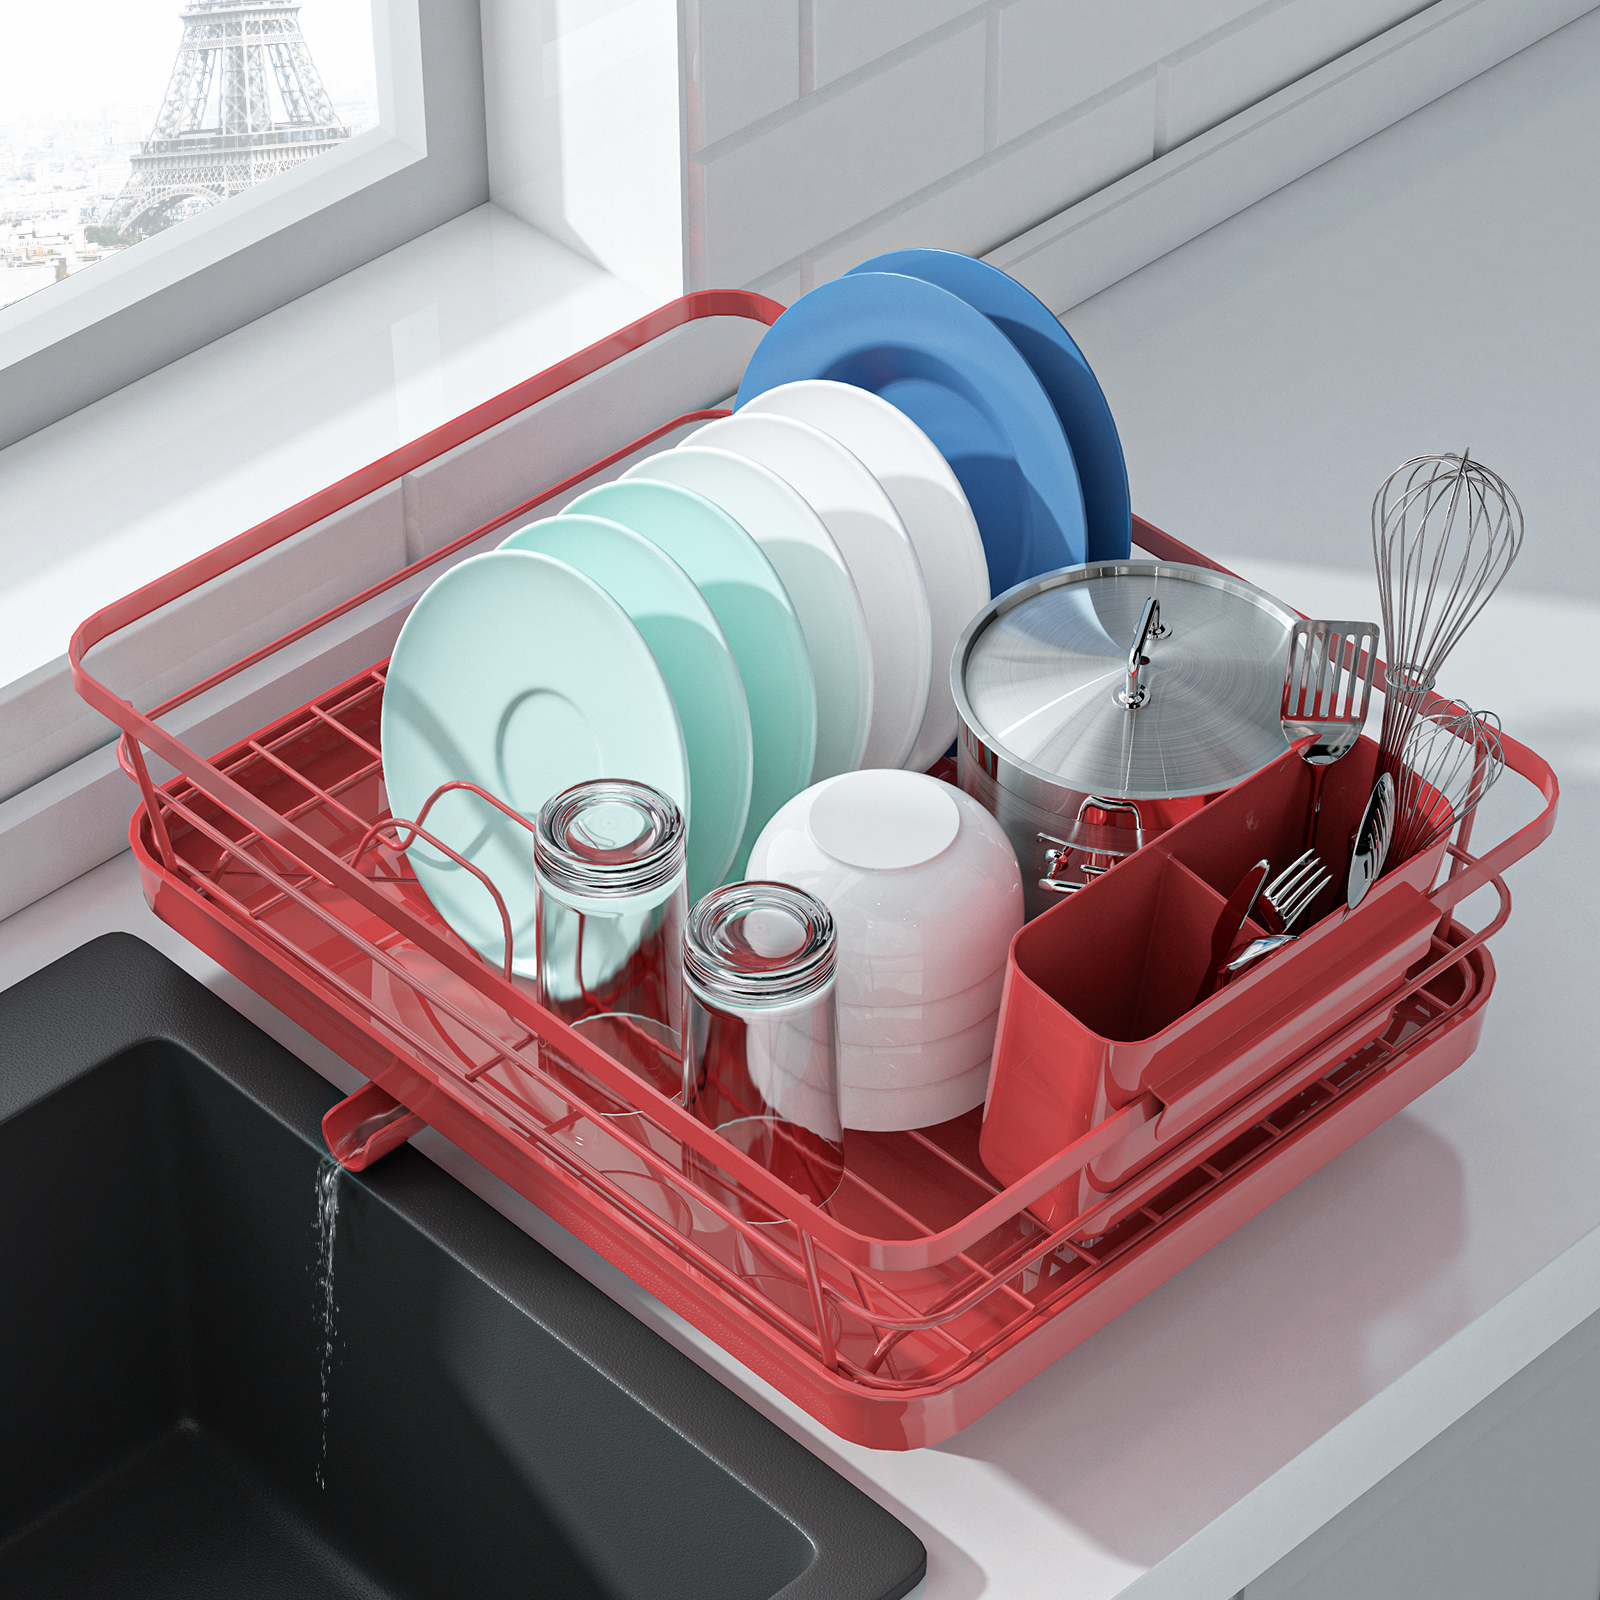 Kitsure Dish Drying Rack - Adjustable & Space-Saving Dish Rack (25.5-3